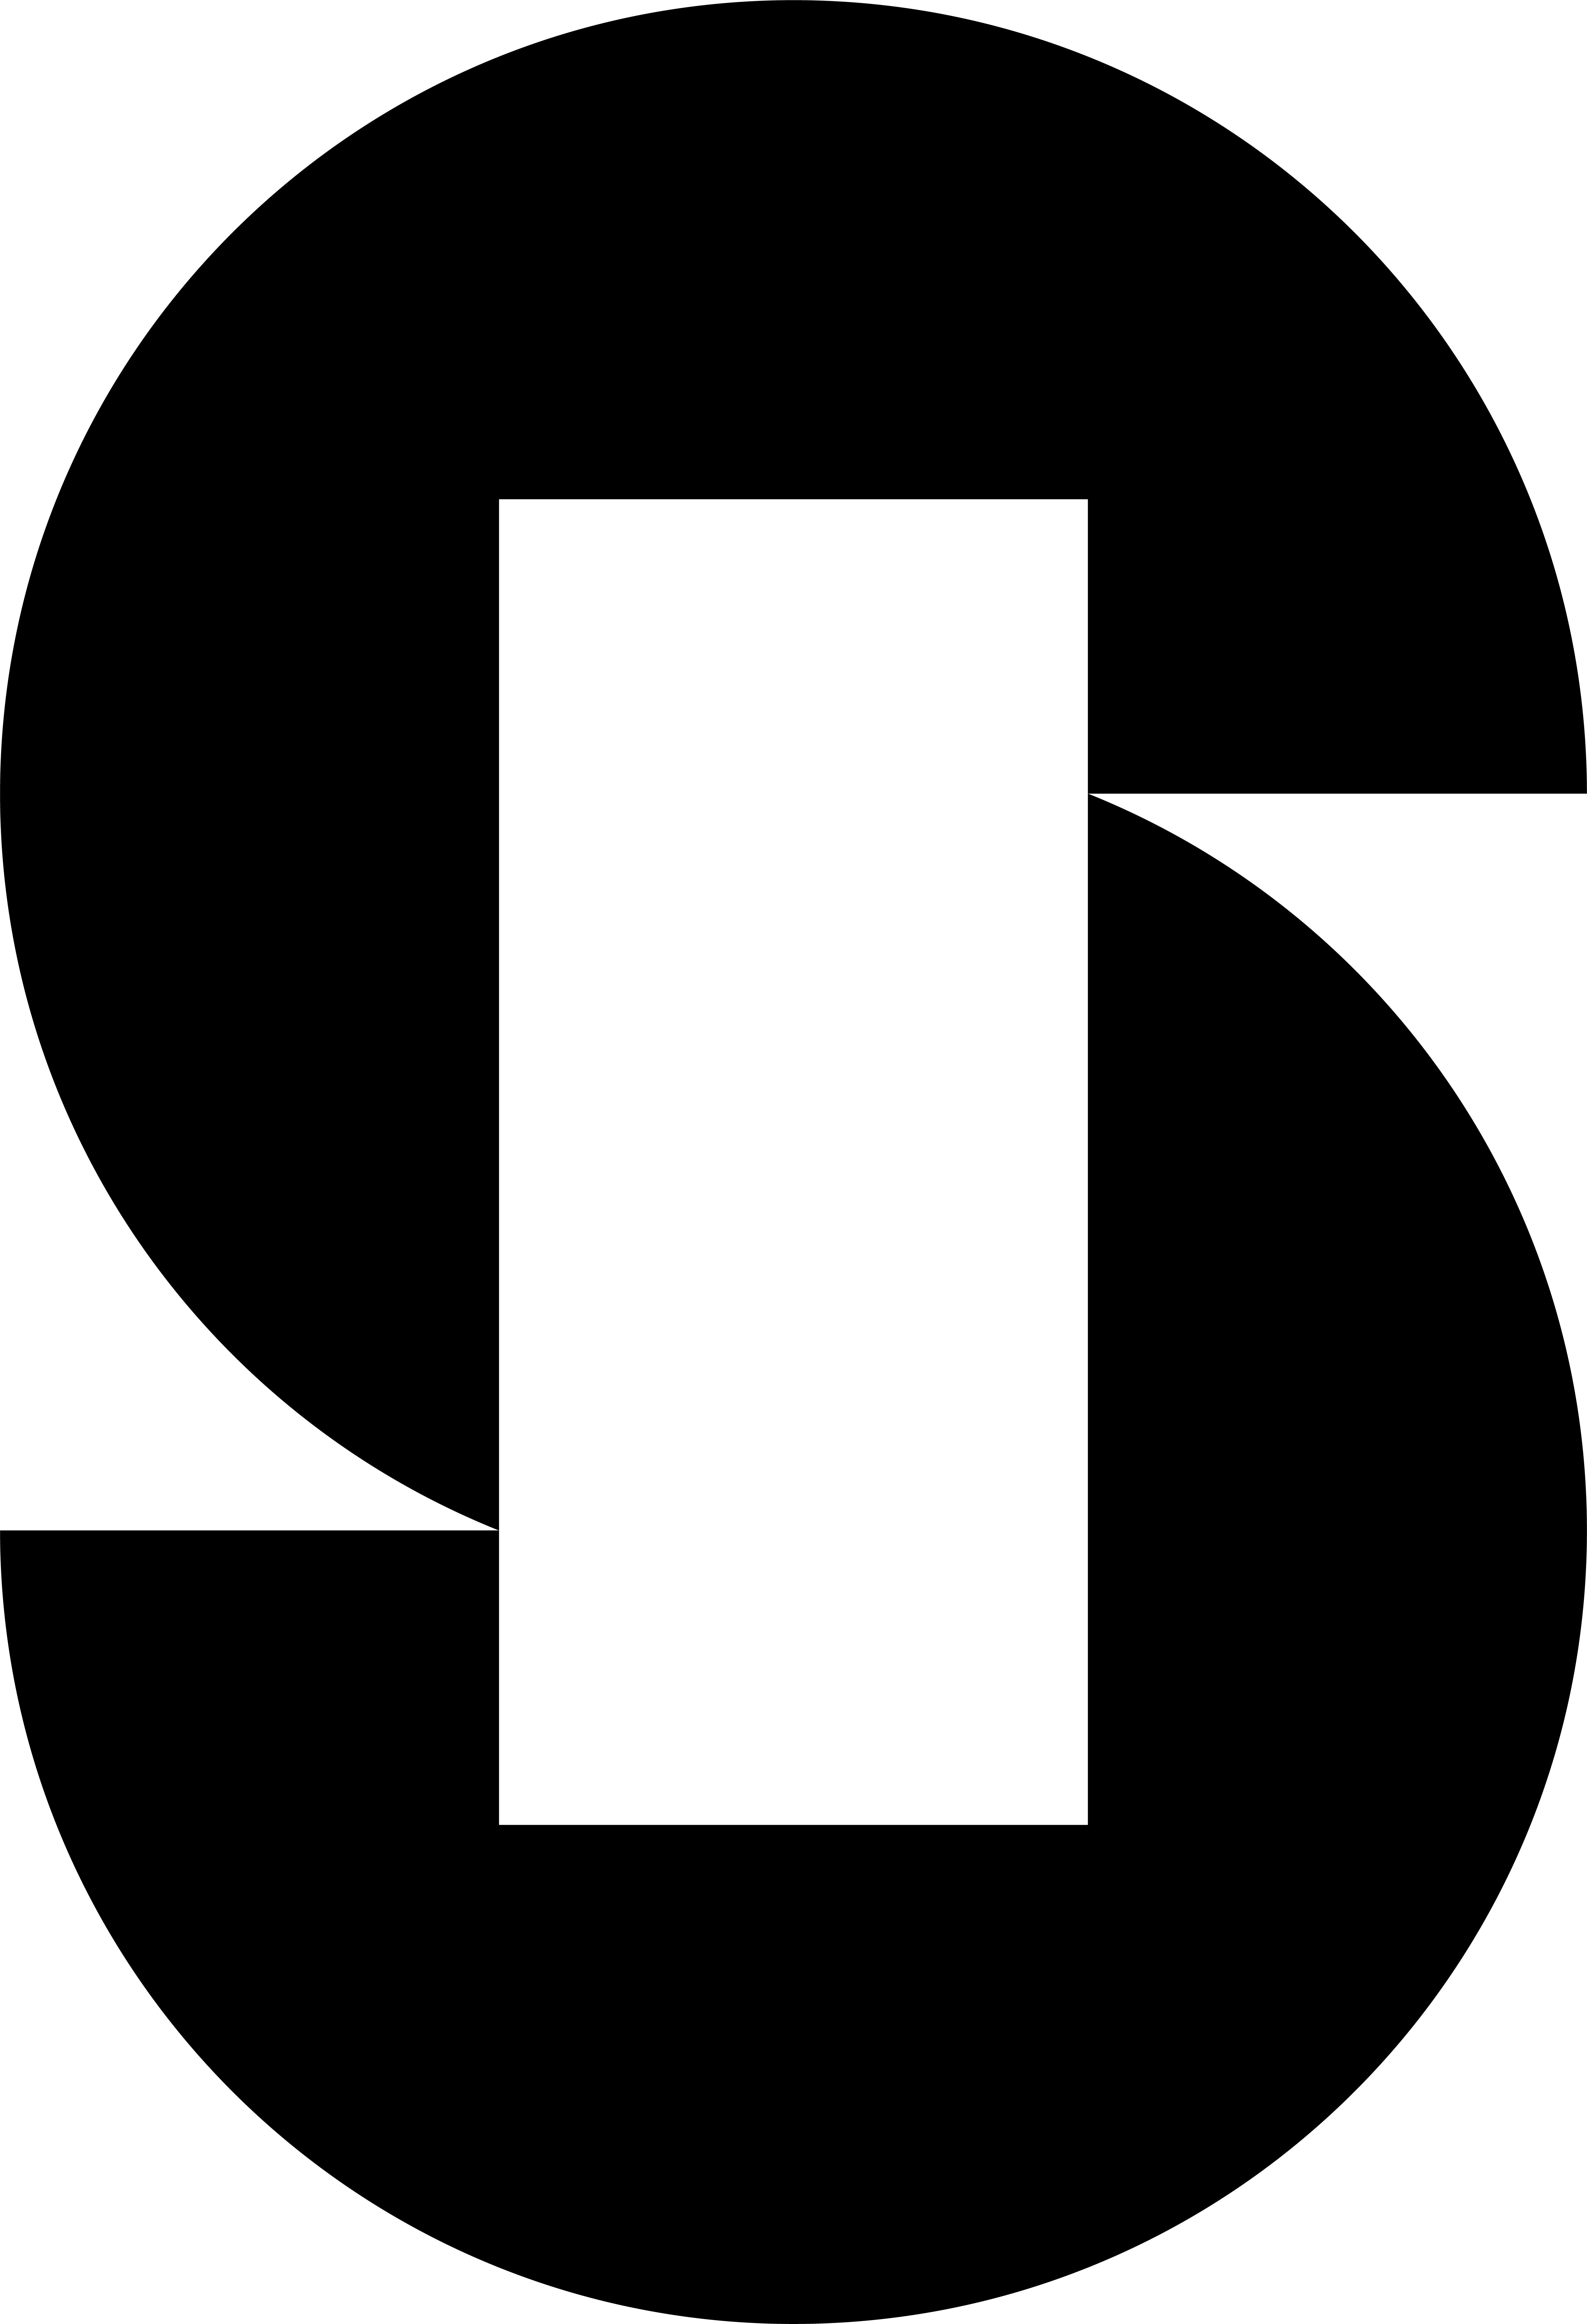 SKILPOD logo